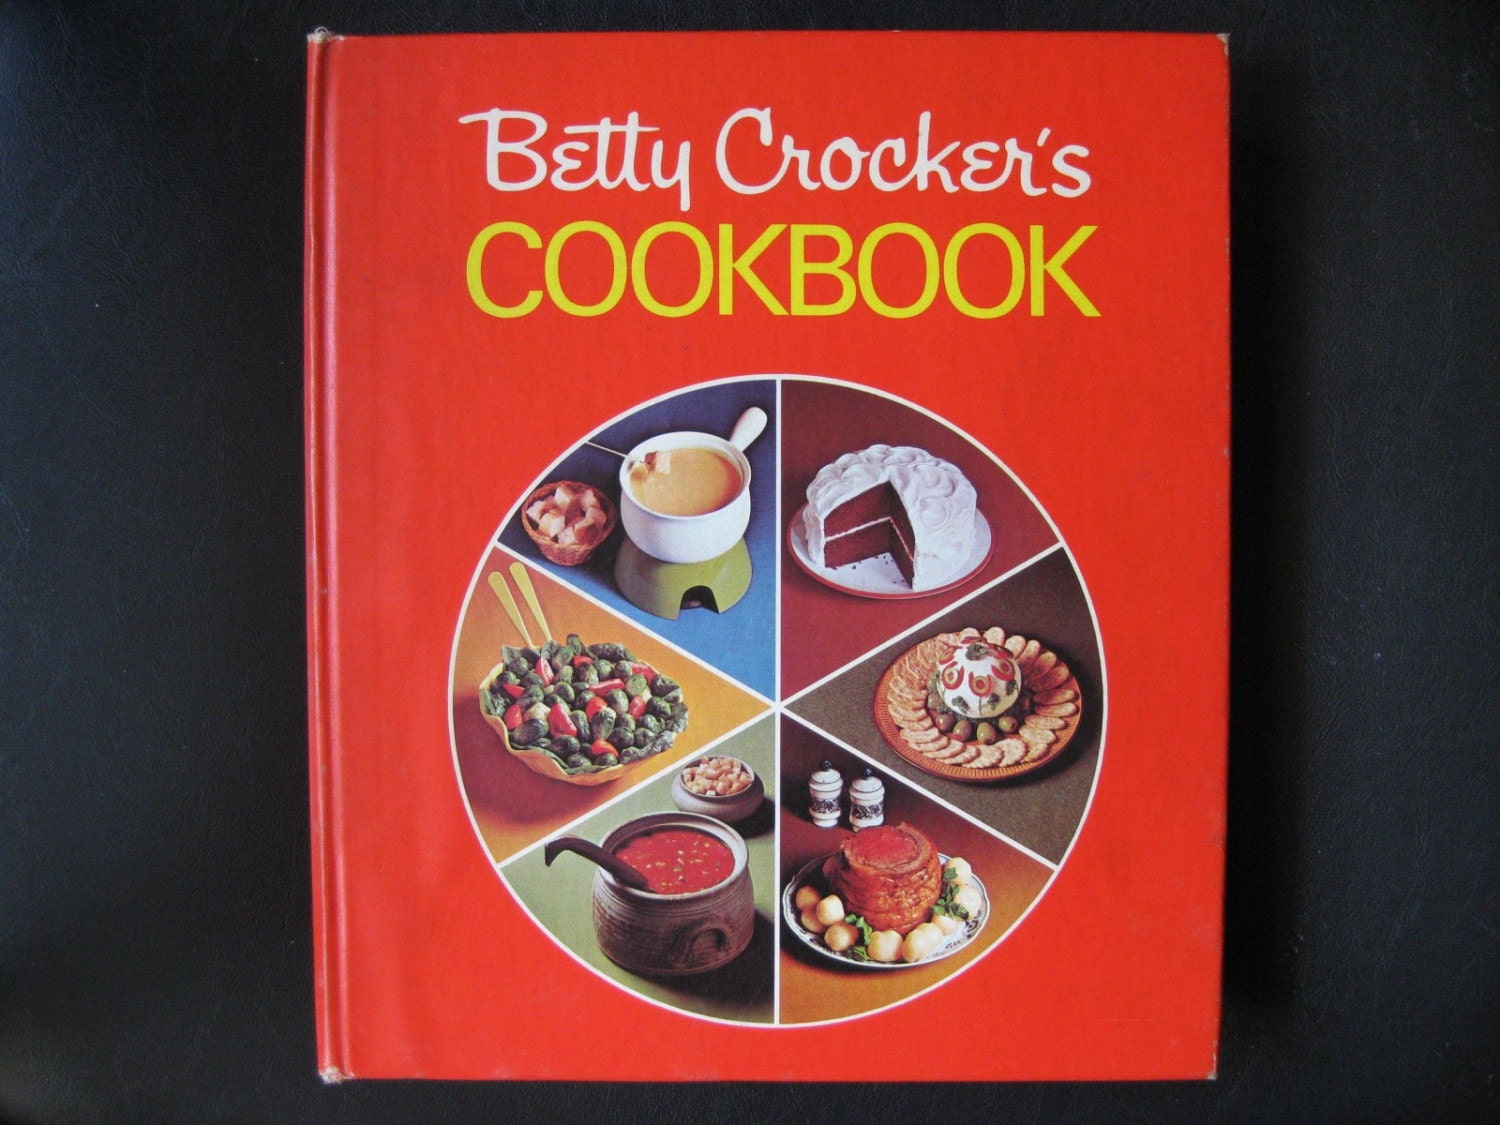 betty crockers cookbook 1969 pdf download